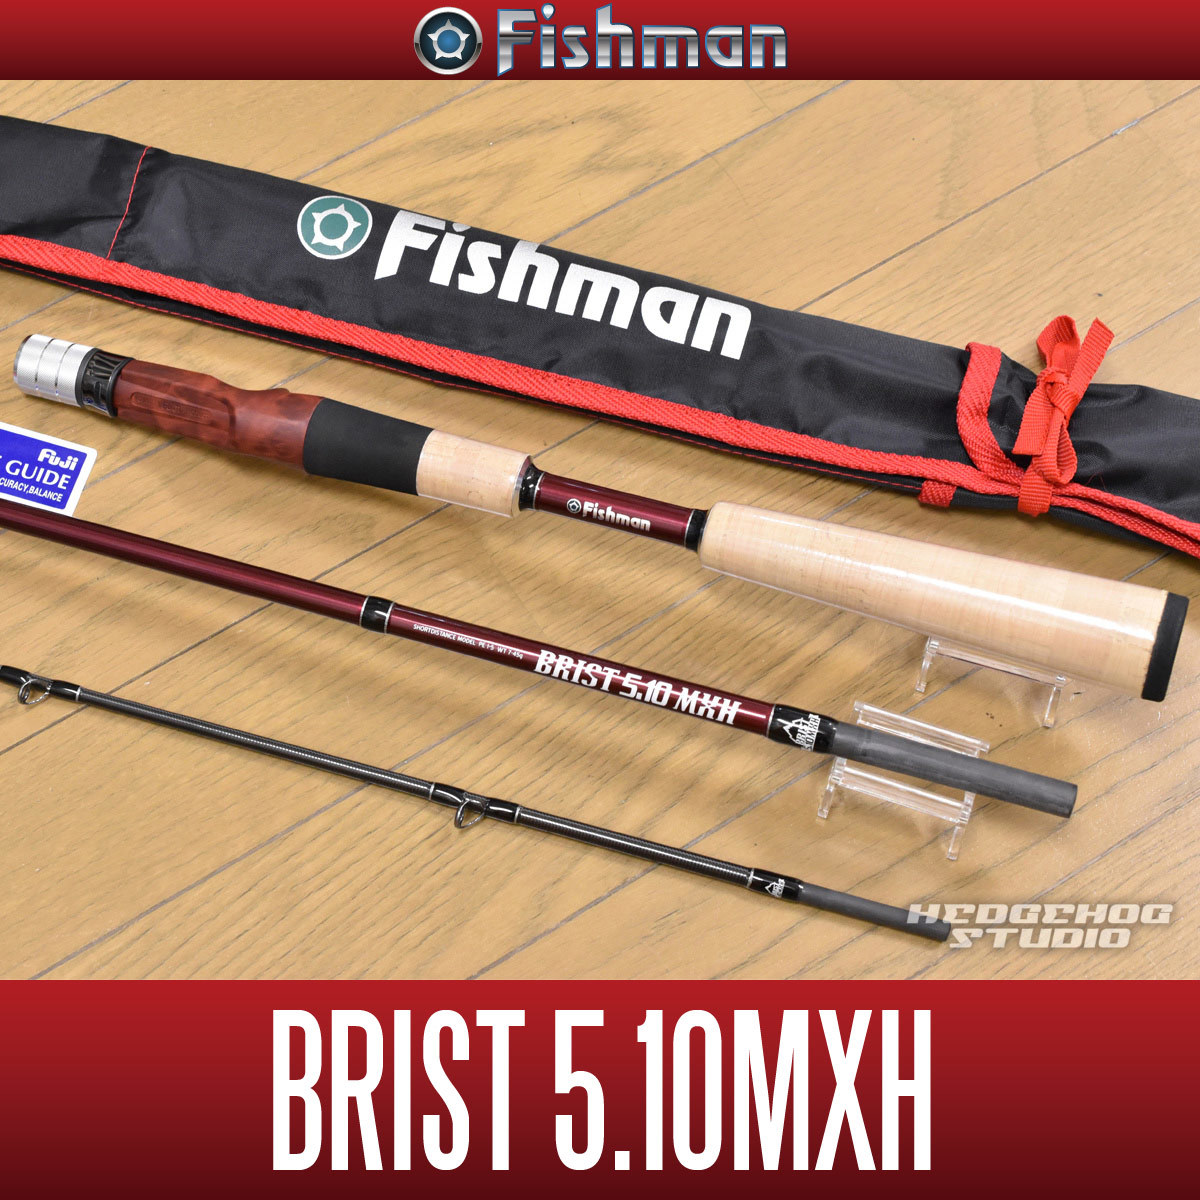 Fishman/フィッシュマン] BRIST 5.10MXH /* | www.livusinc.com.br